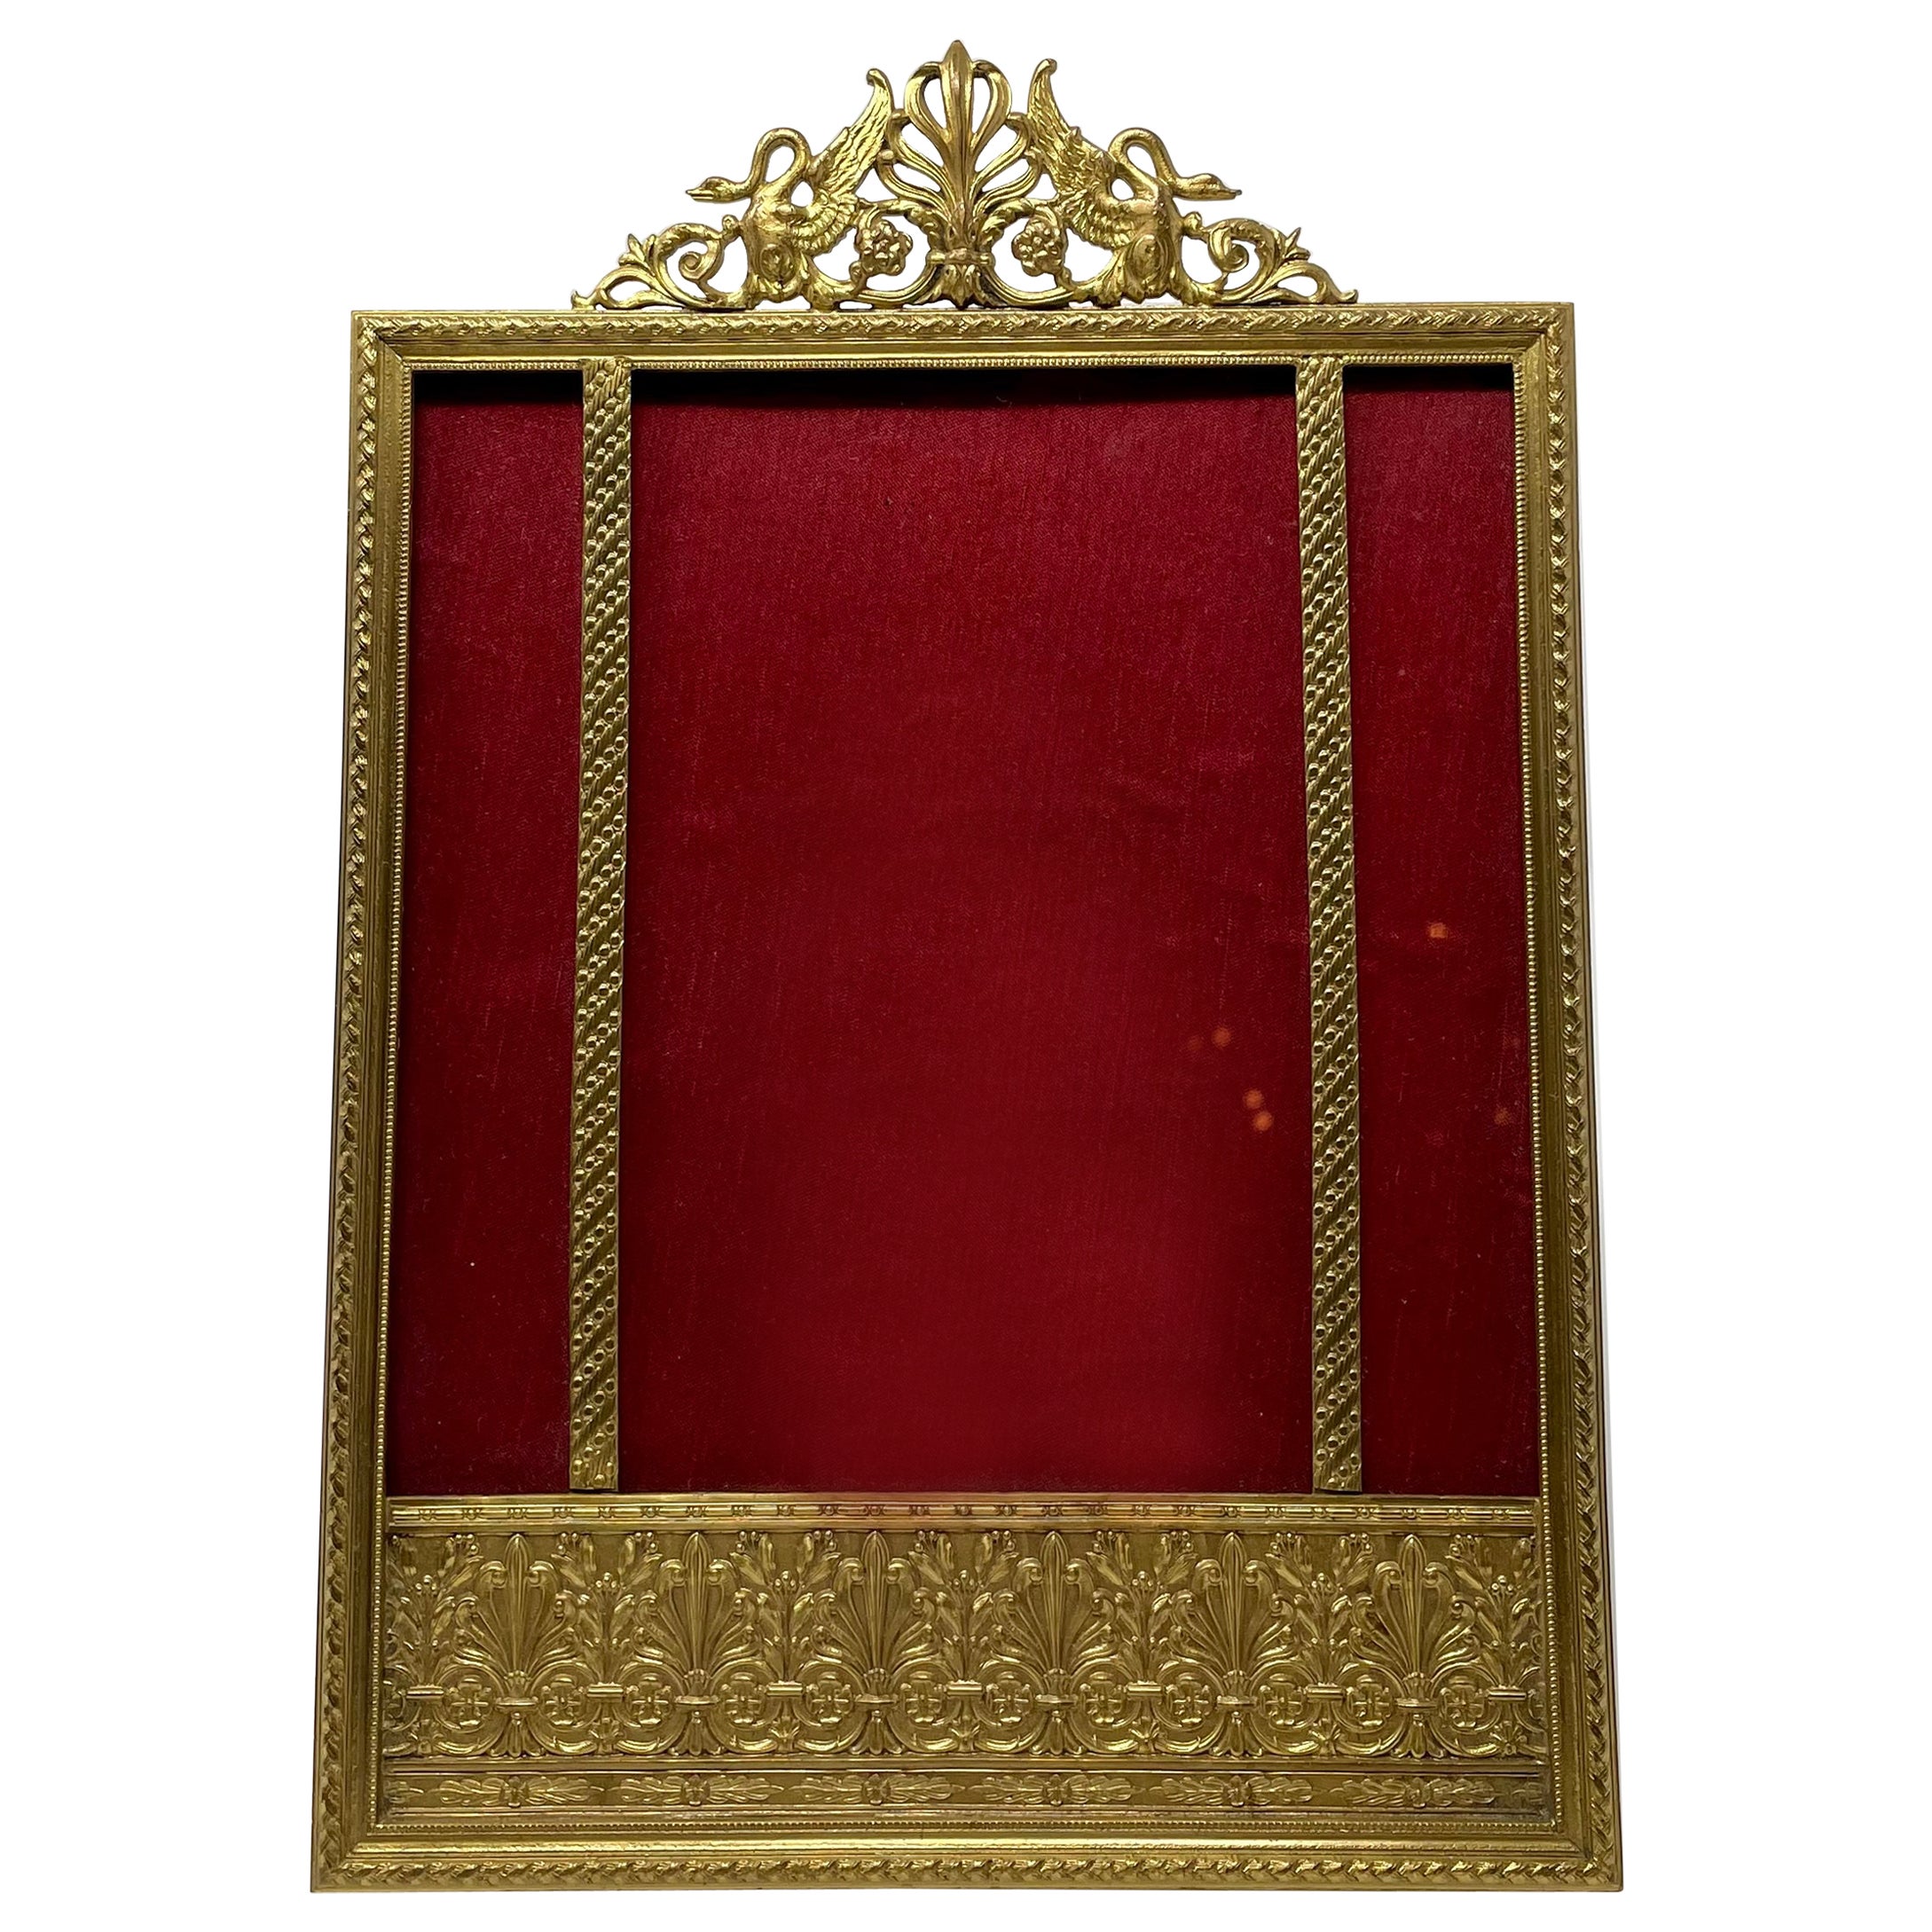 Antique French Empire Style Ormolu Frame circa 1900 For Sale